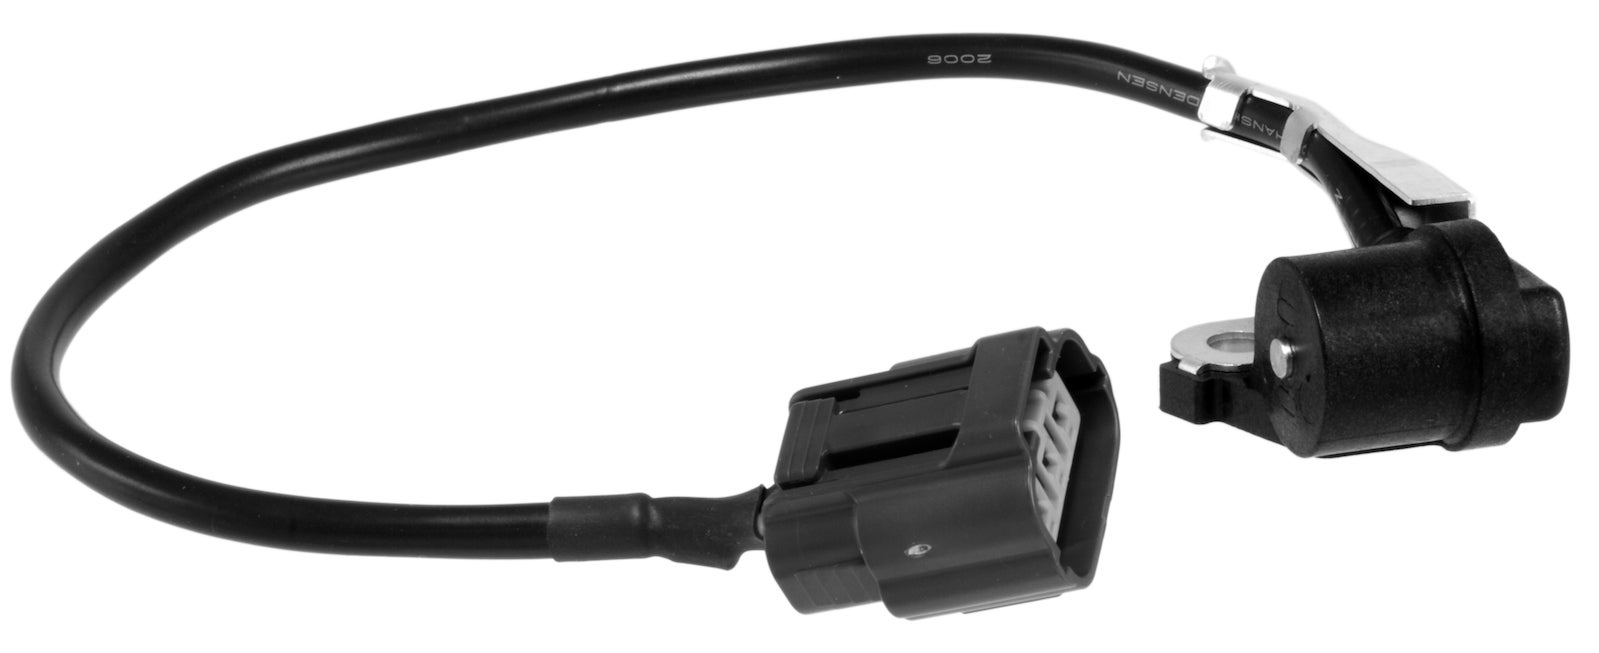 Crank angle sensor for Mazda 323 Astina BJ 1.6L ZMD 9/98-5/02 4-Cyl Check Crank & Cam Illustration